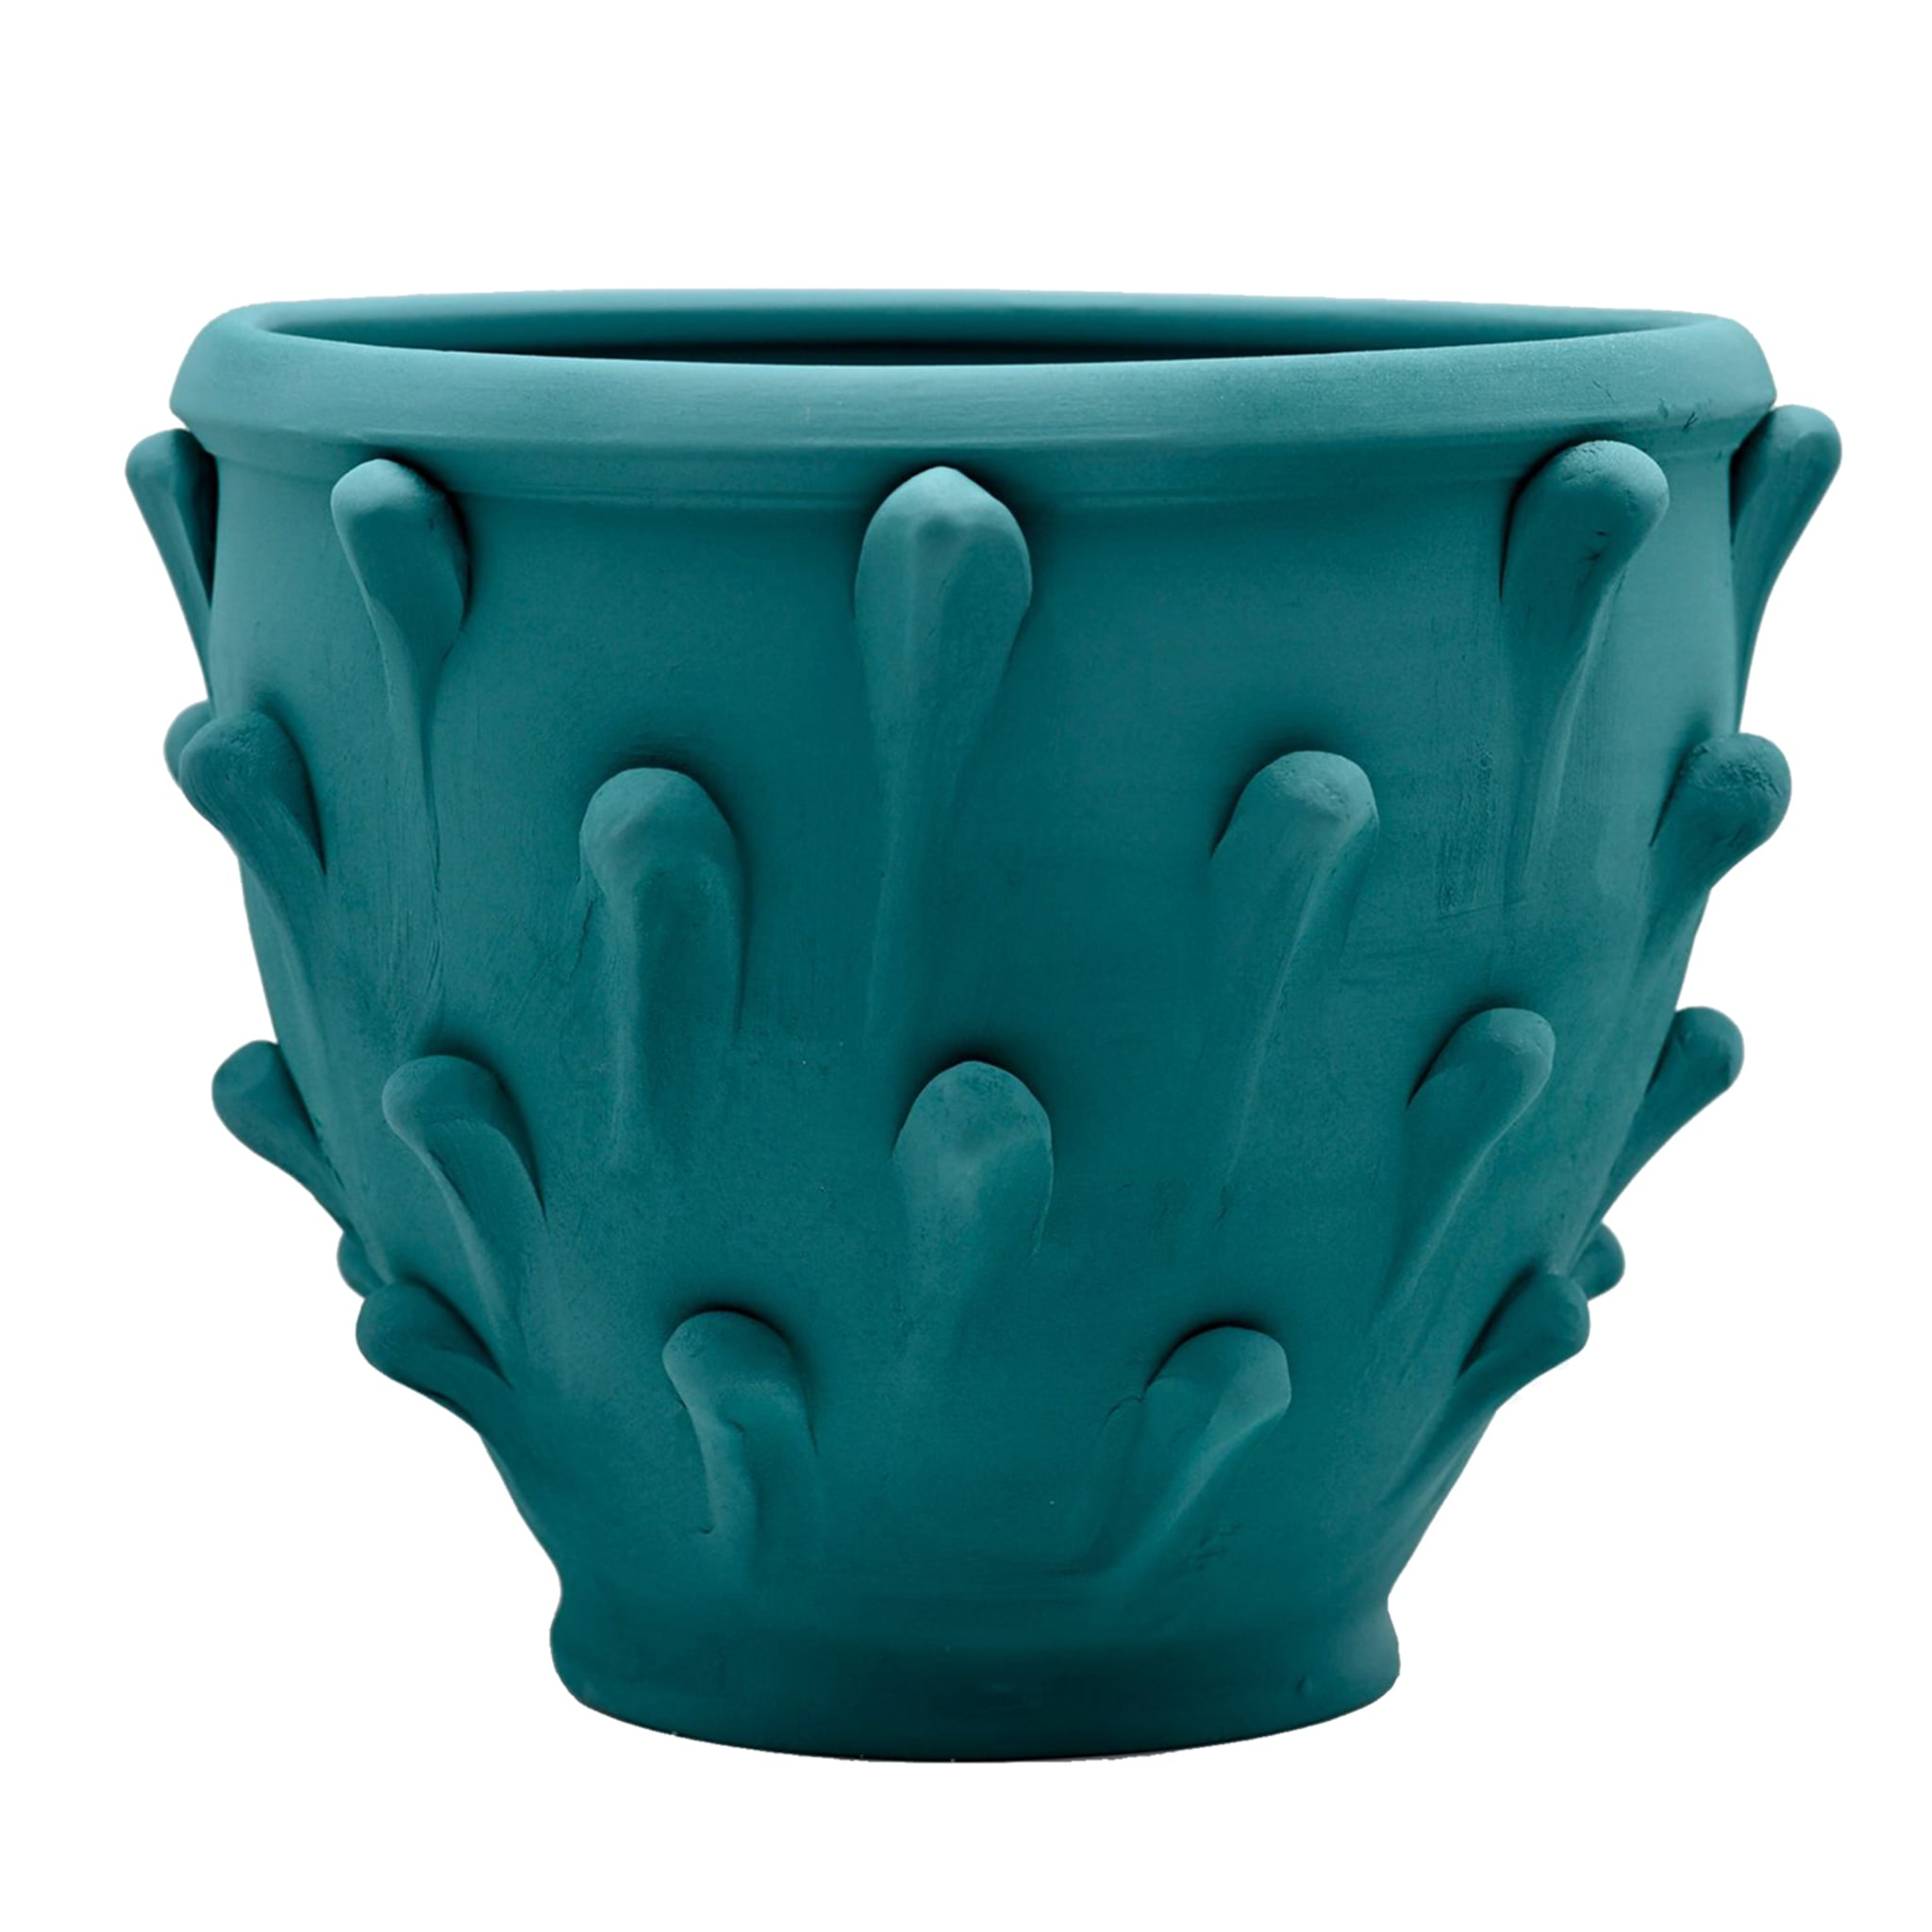 Turquoise Vase #1 - Main view